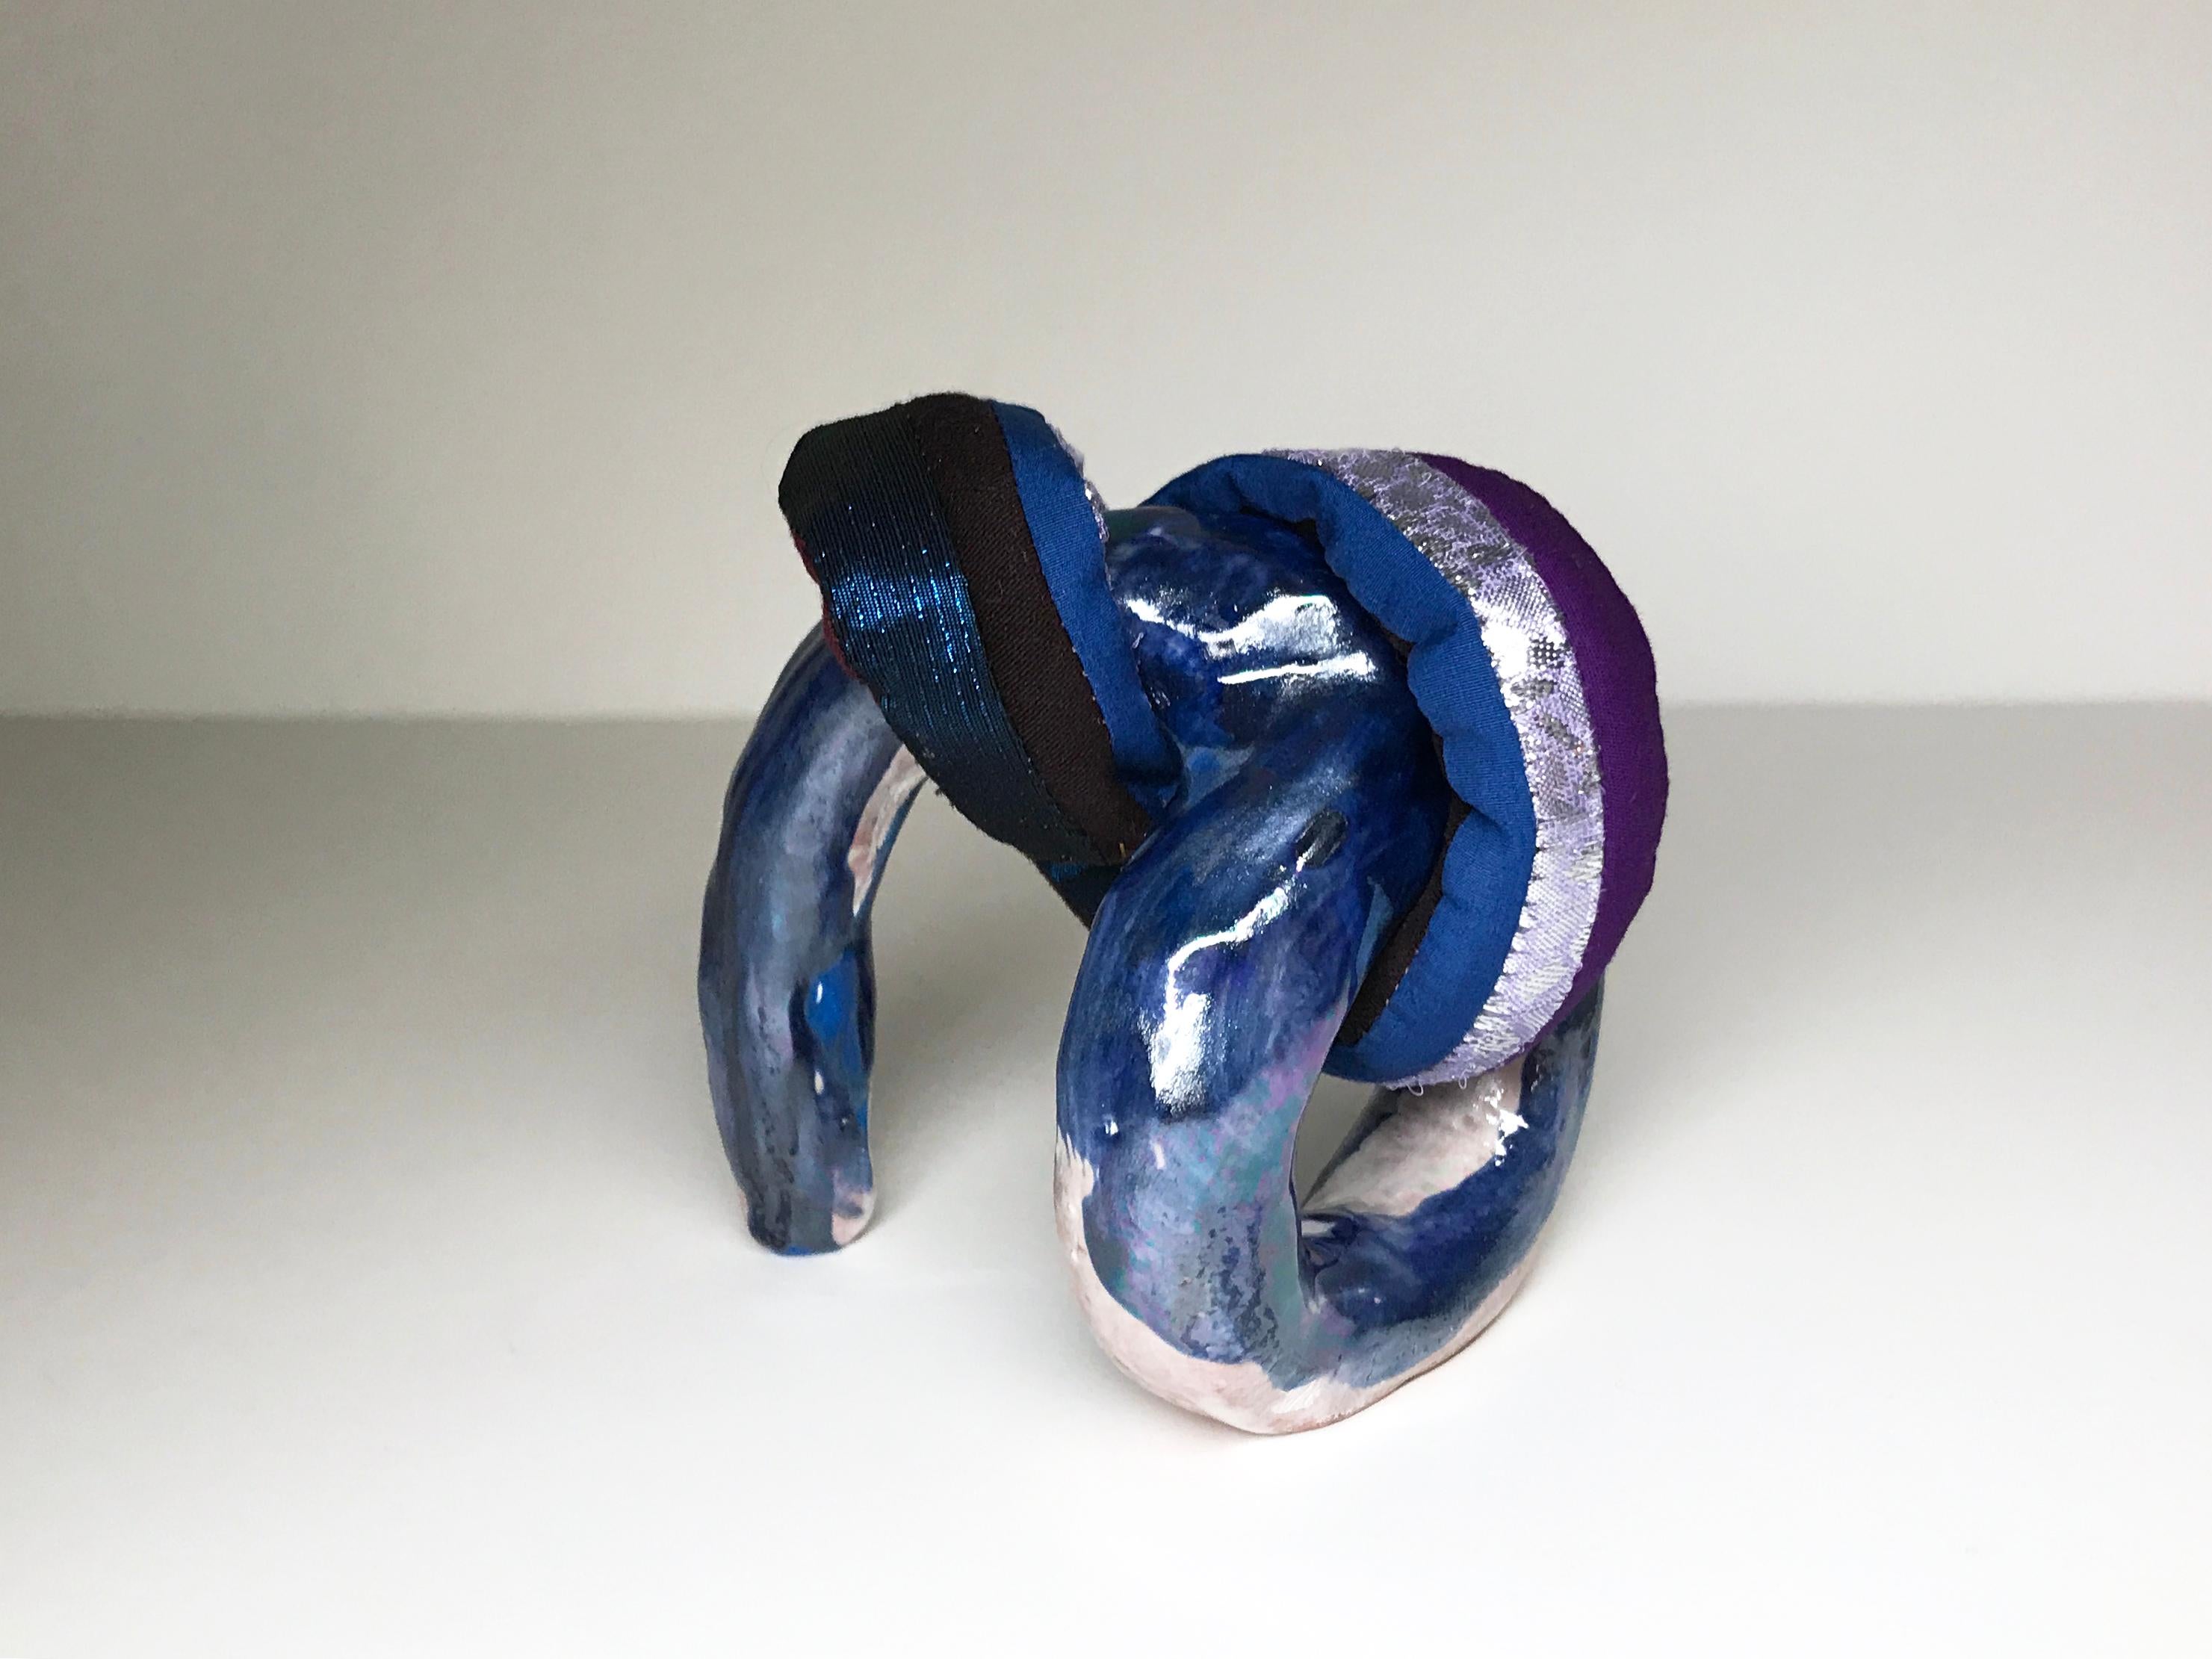 Ak Jansen Abstract Sculpture - Ceramic and textile small sculpture: 'No. 18'